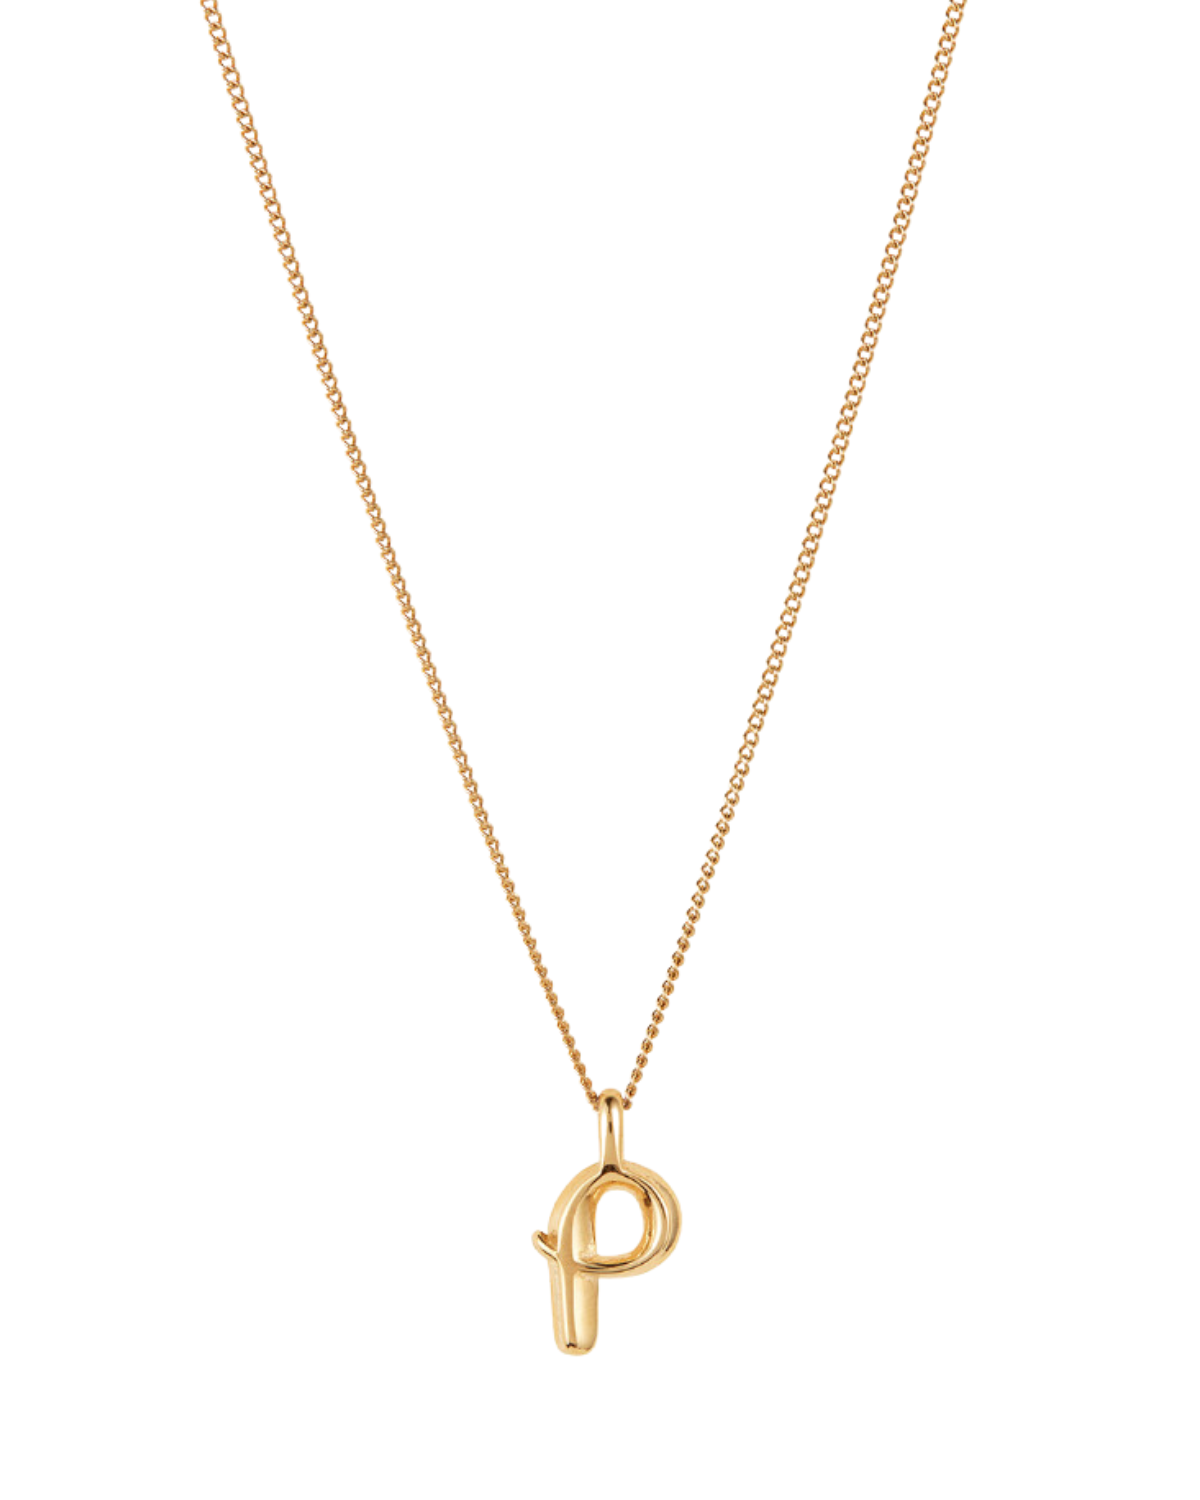 Monogram Necklace - P (Gold)